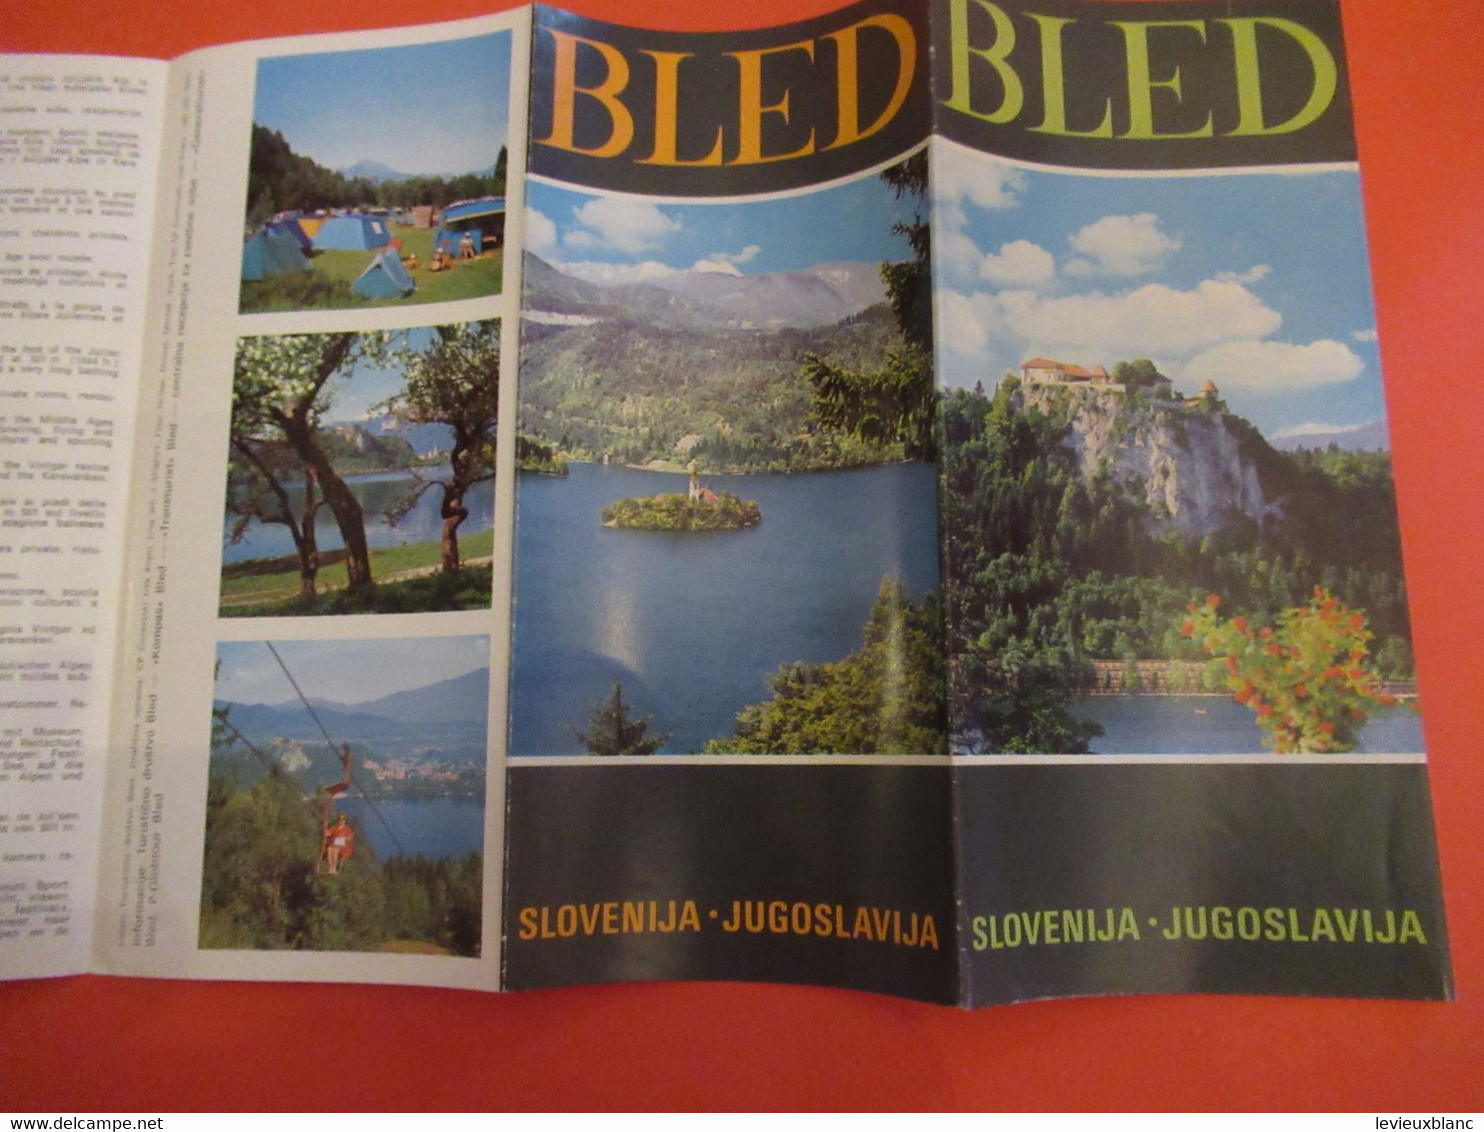 YOUGOSLAVIE/Slovenija - Jugoslavija/Izdalo Turisticno BLED /Savez Regiona / Beograd/1970                      PGC484 - Reiseprospekte